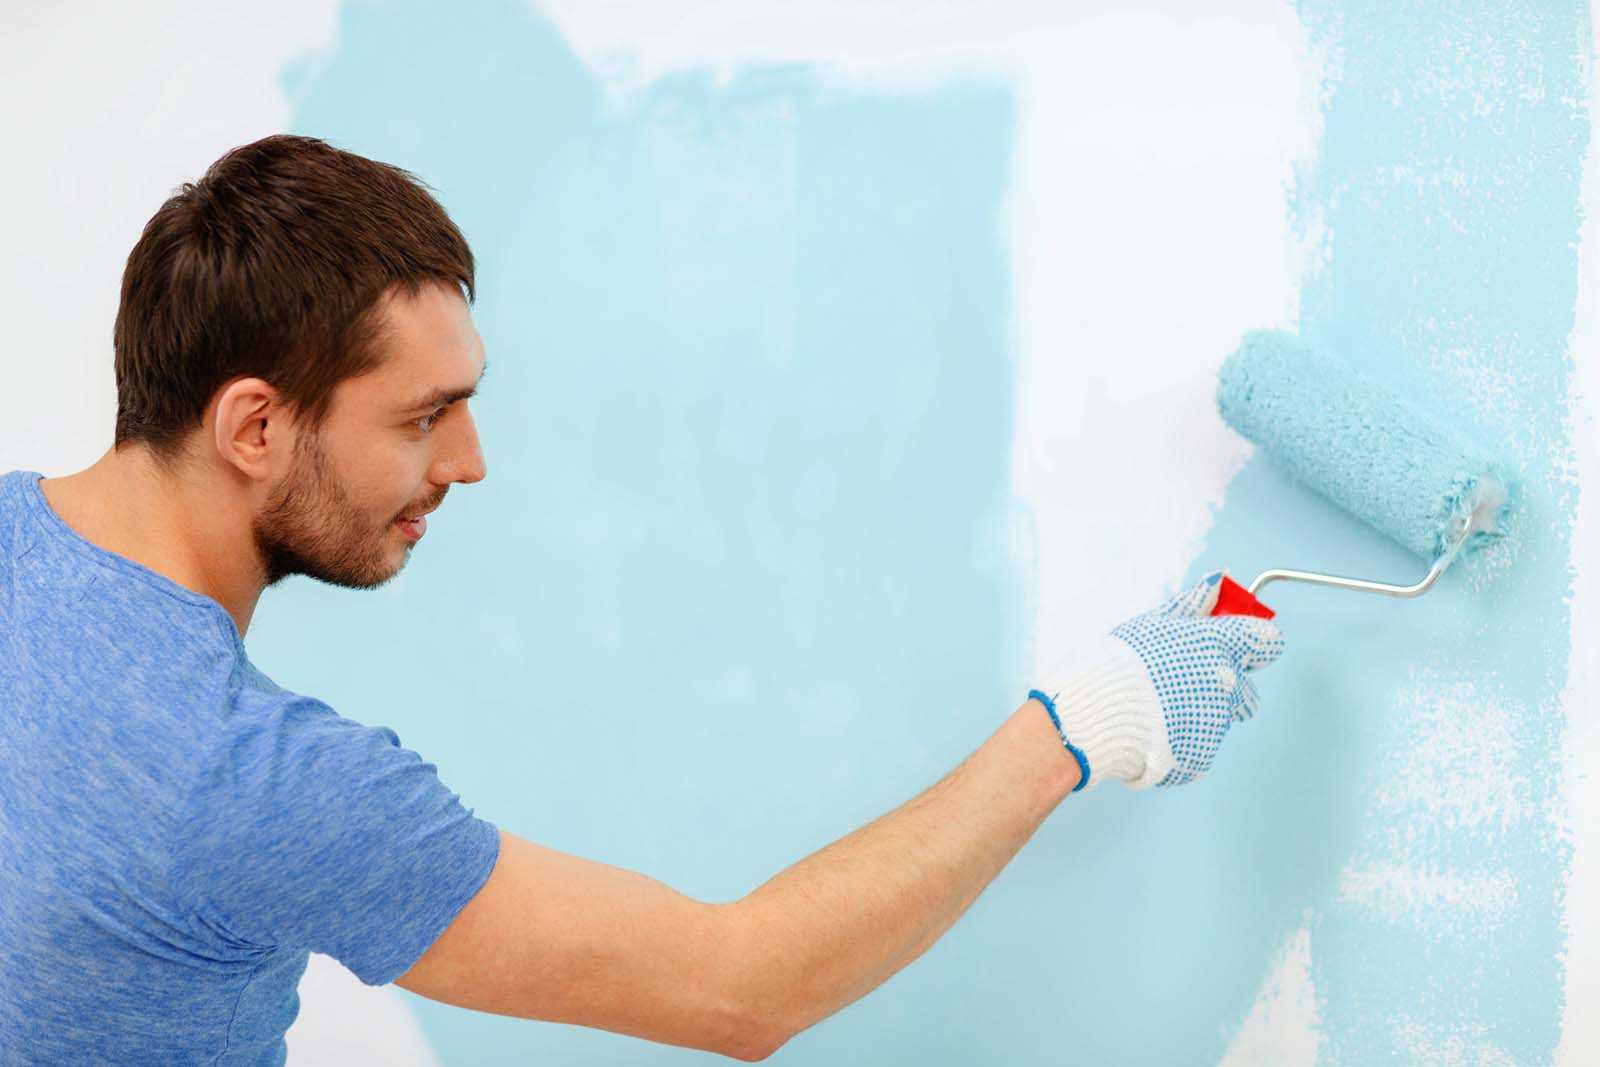 Покраска стен своими руками: фото и видео, как покрасить стены в квартире